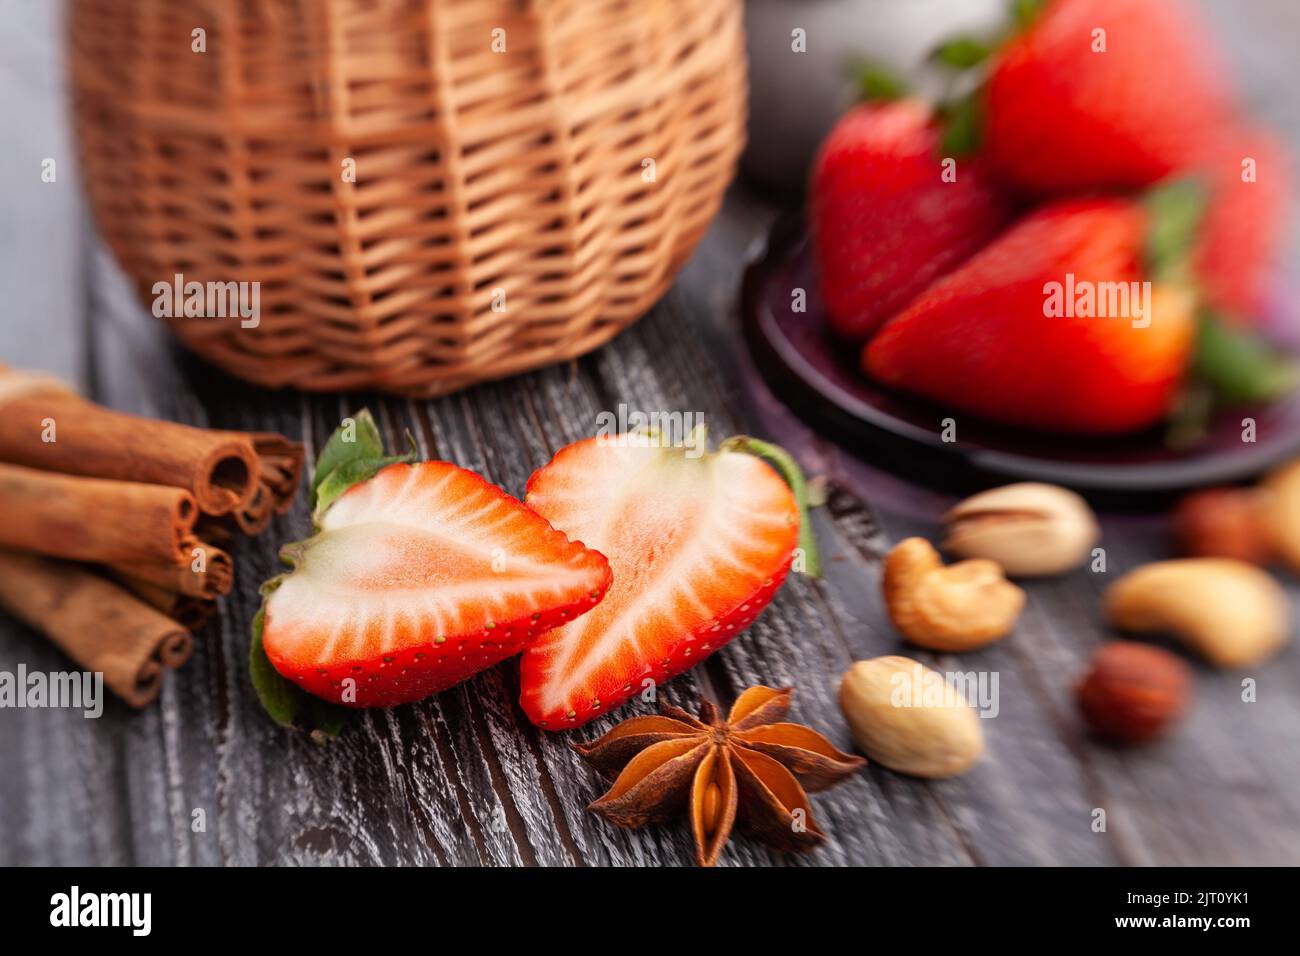 sliced strawberry on wood background Stock Photo